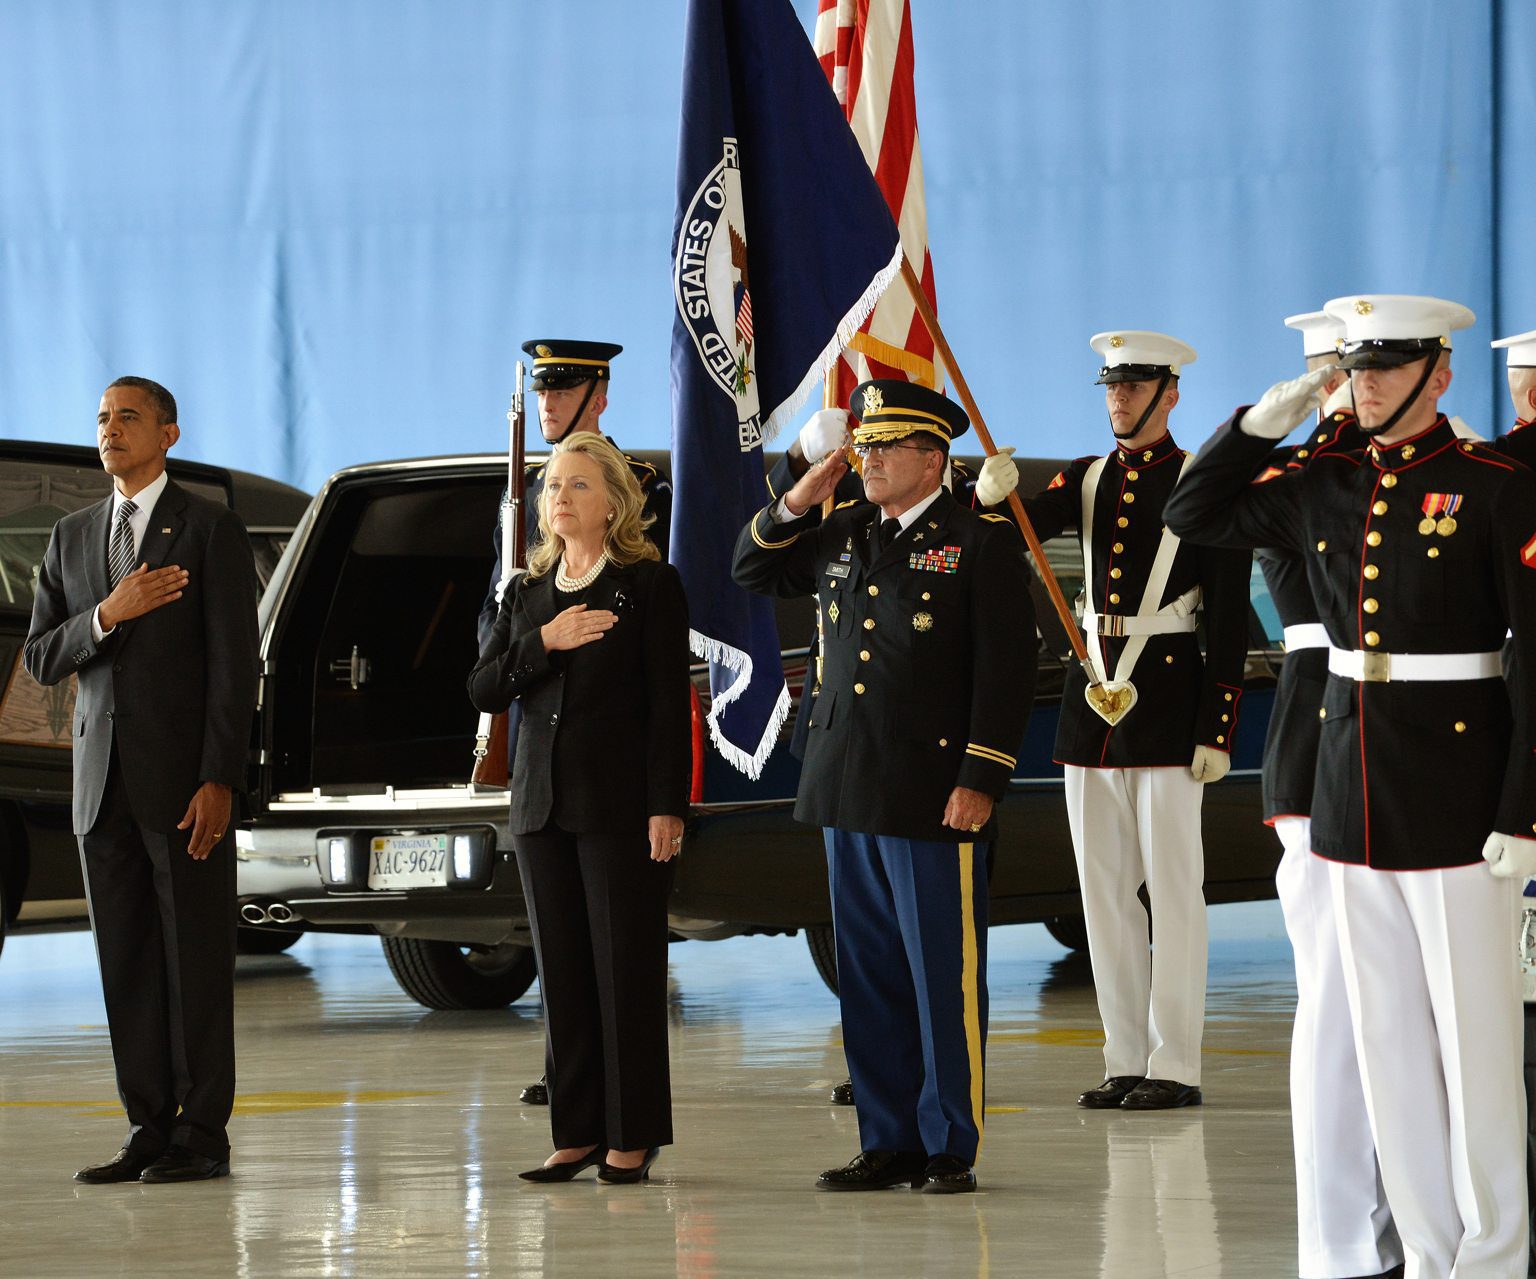 Obama-Clinton-Benghazi-.jpg